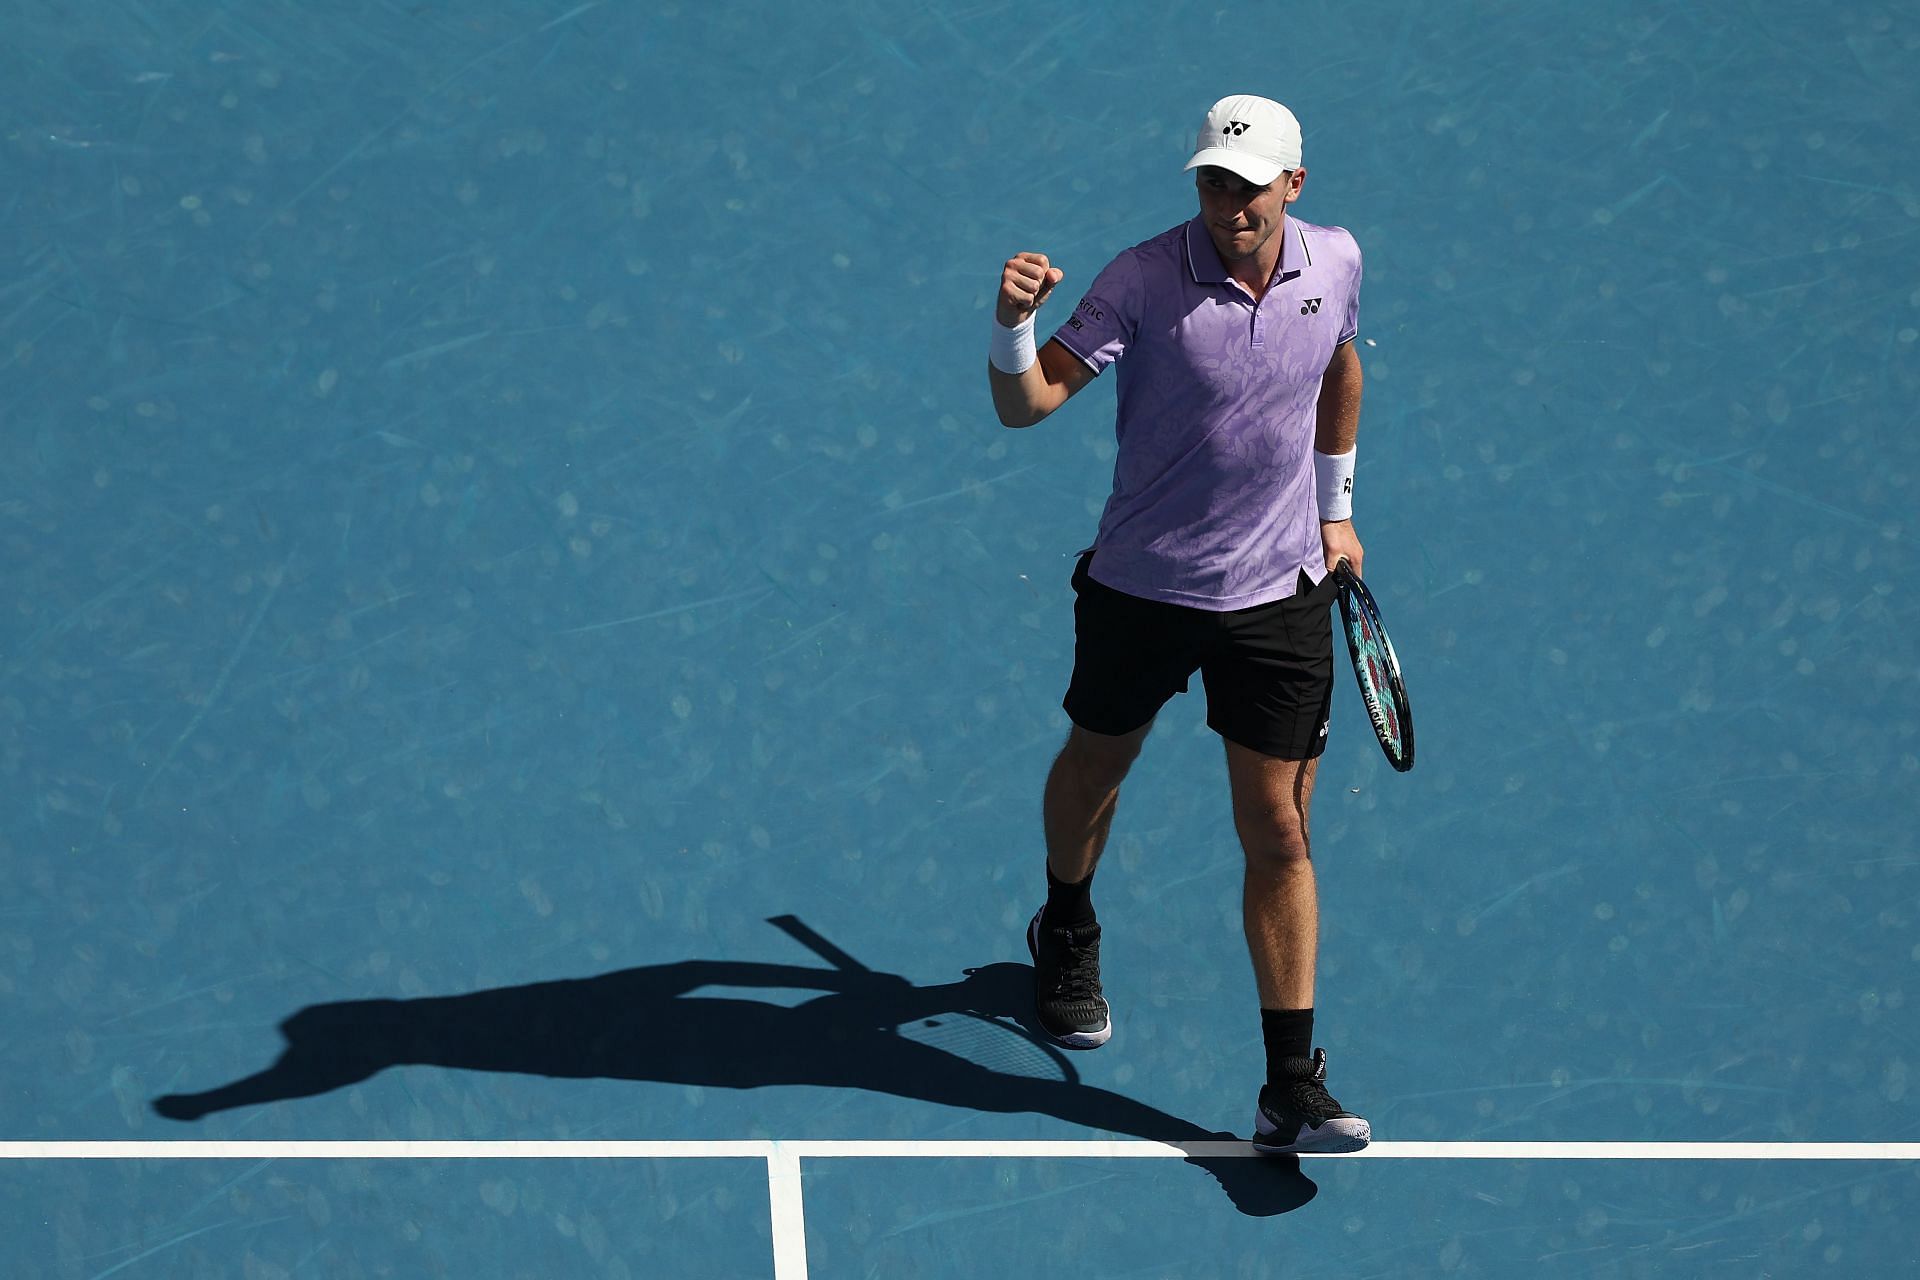 Casper Ruud in action at the Australian Open